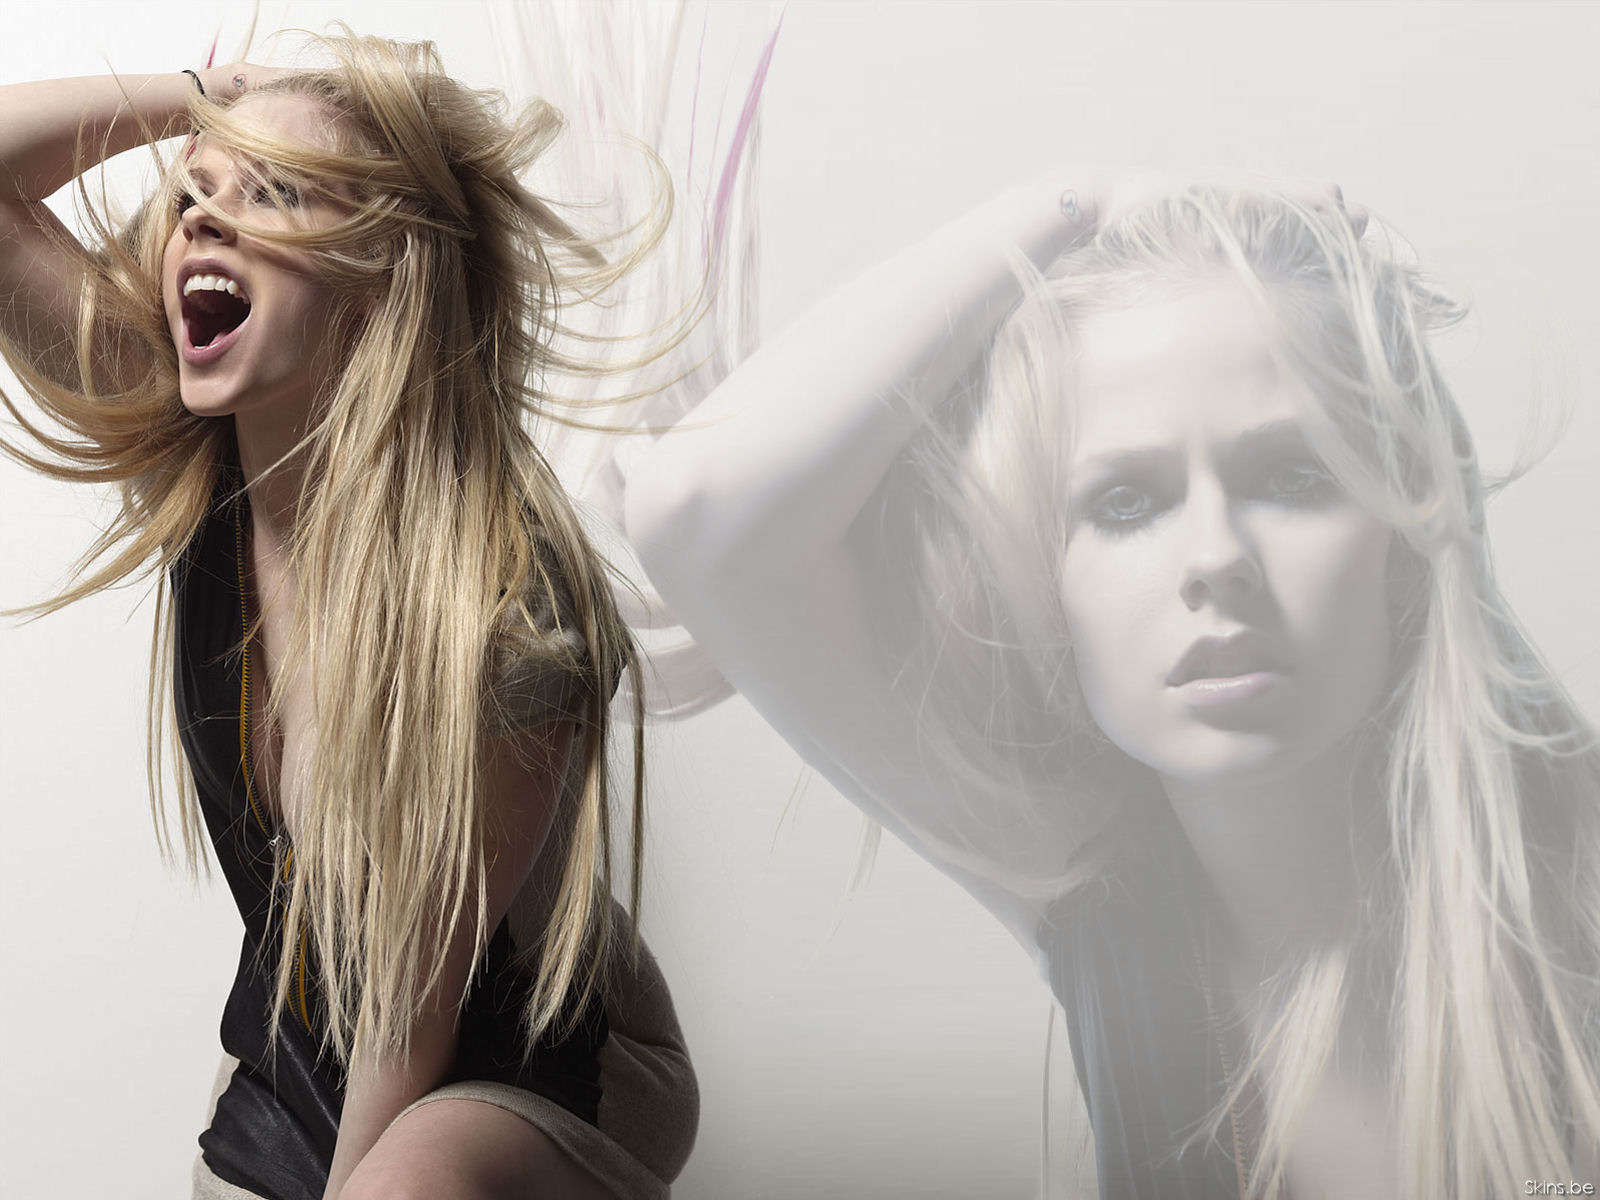 Download full size Avril Lavigne wallpaper / Celebrities Female / 1600x1200